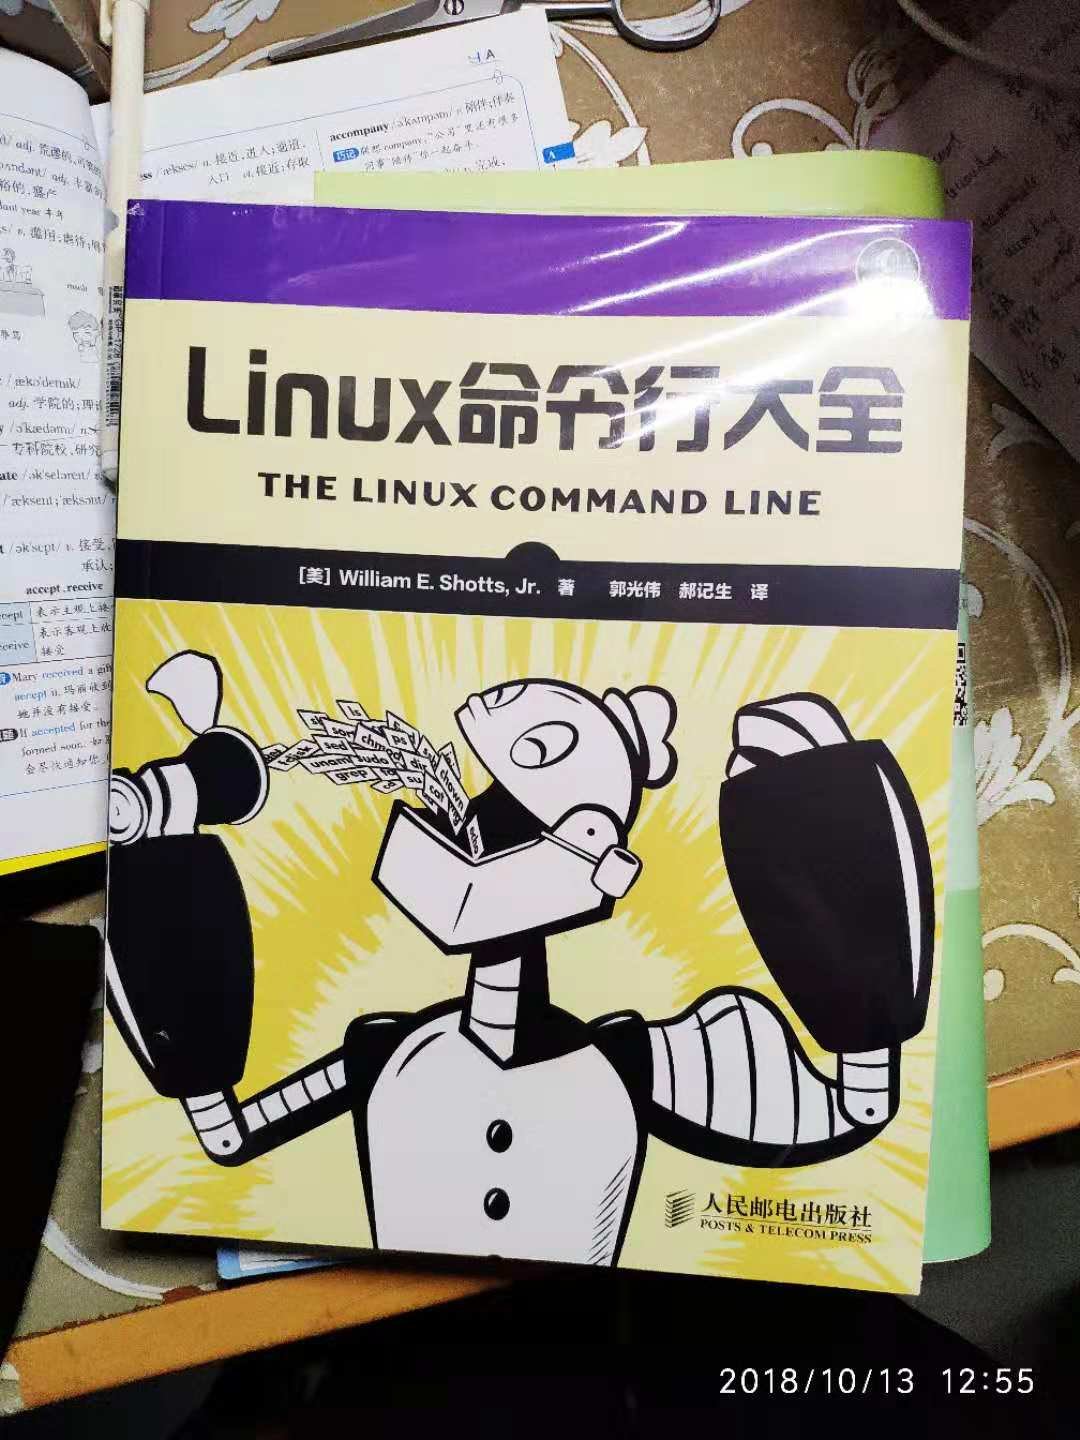 Linux命令大全，包括了所有平时要用的命令，书的质量很好，物流也很快，愉快的一次购物经历。